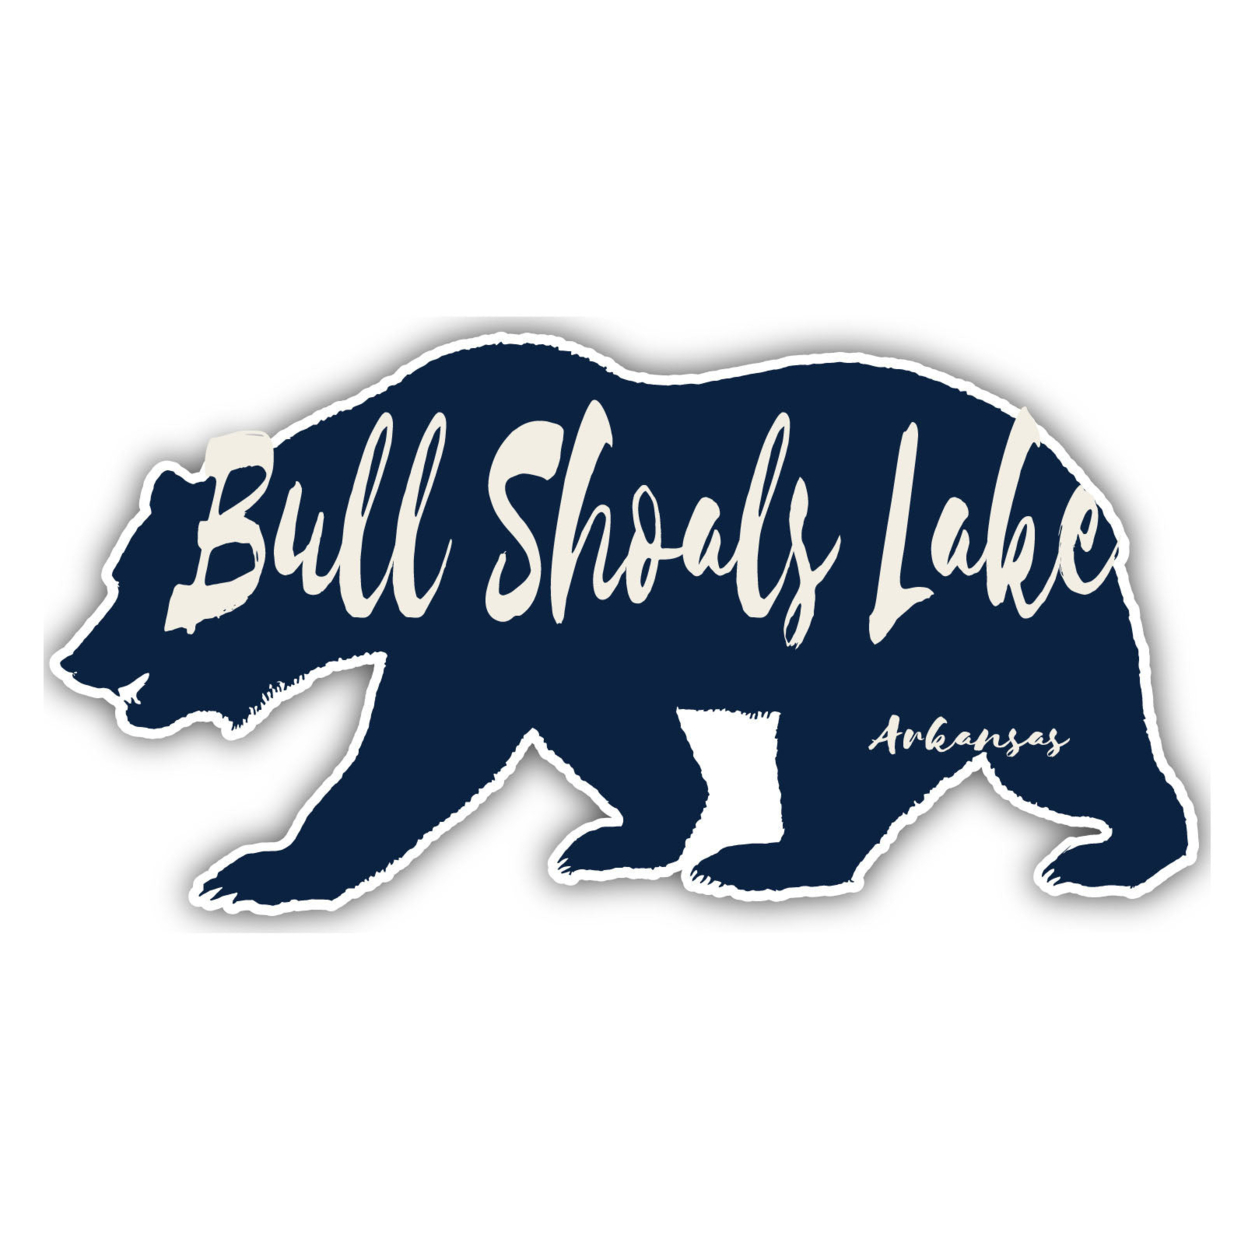 Bull Shoals Lake Arkansas Souvenir Decorative Stickers (Choose Theme And Size) - Single Unit, 4-Inch, Camp Life